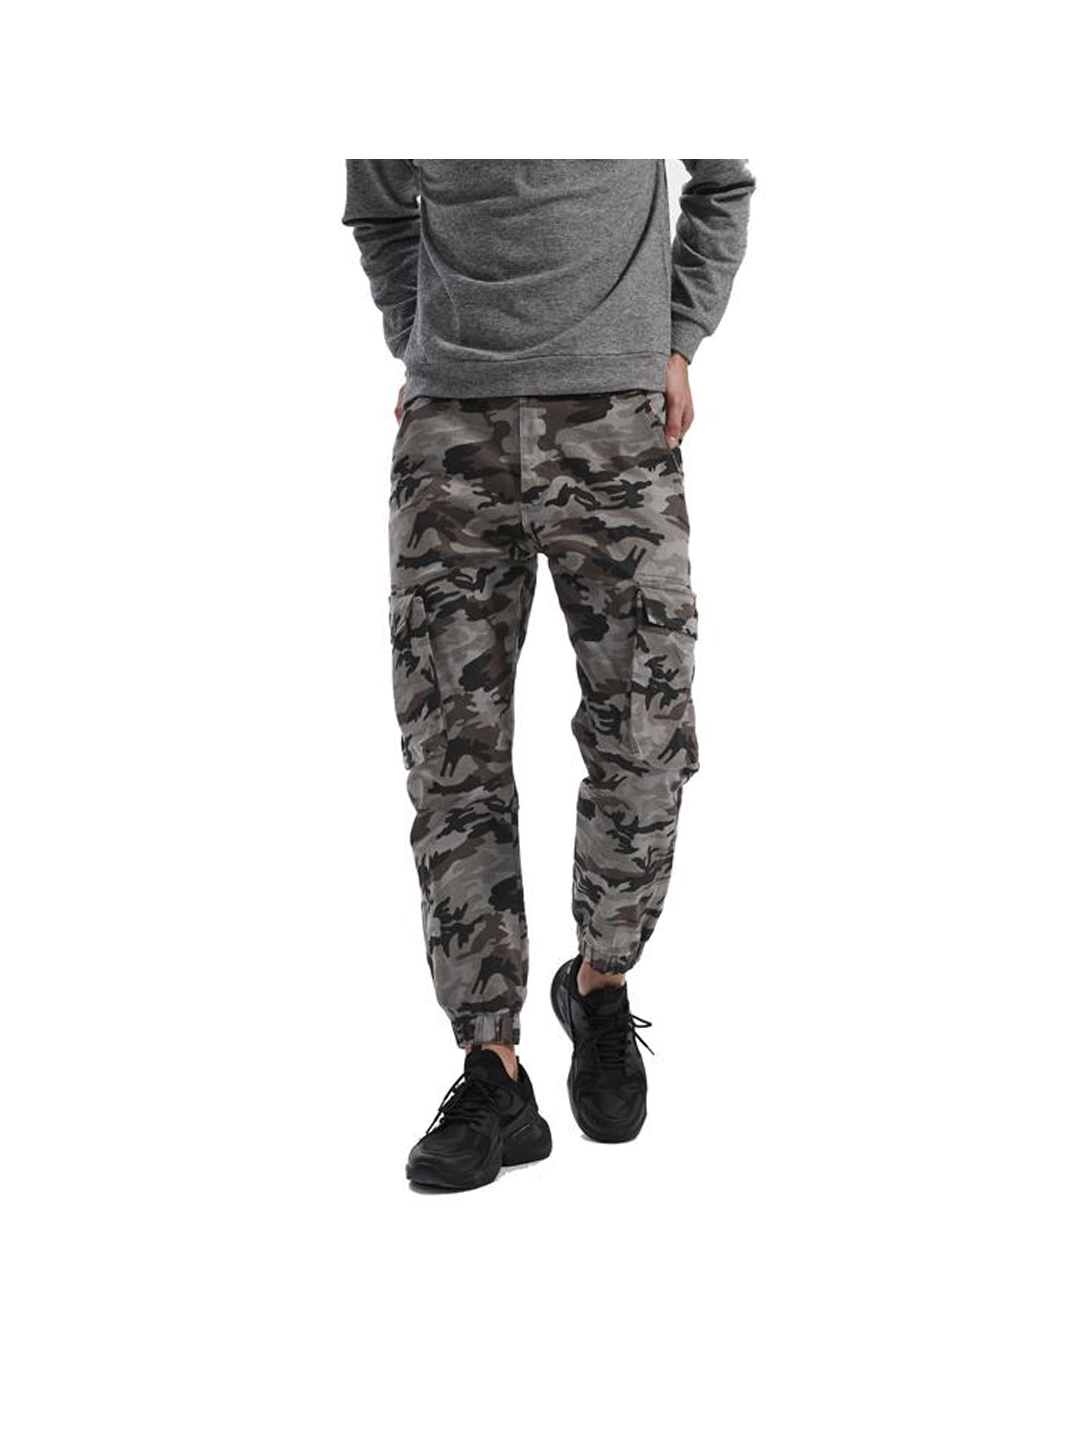 Men's Edward Camouflage Casual Pants-poisonstreetwear.com